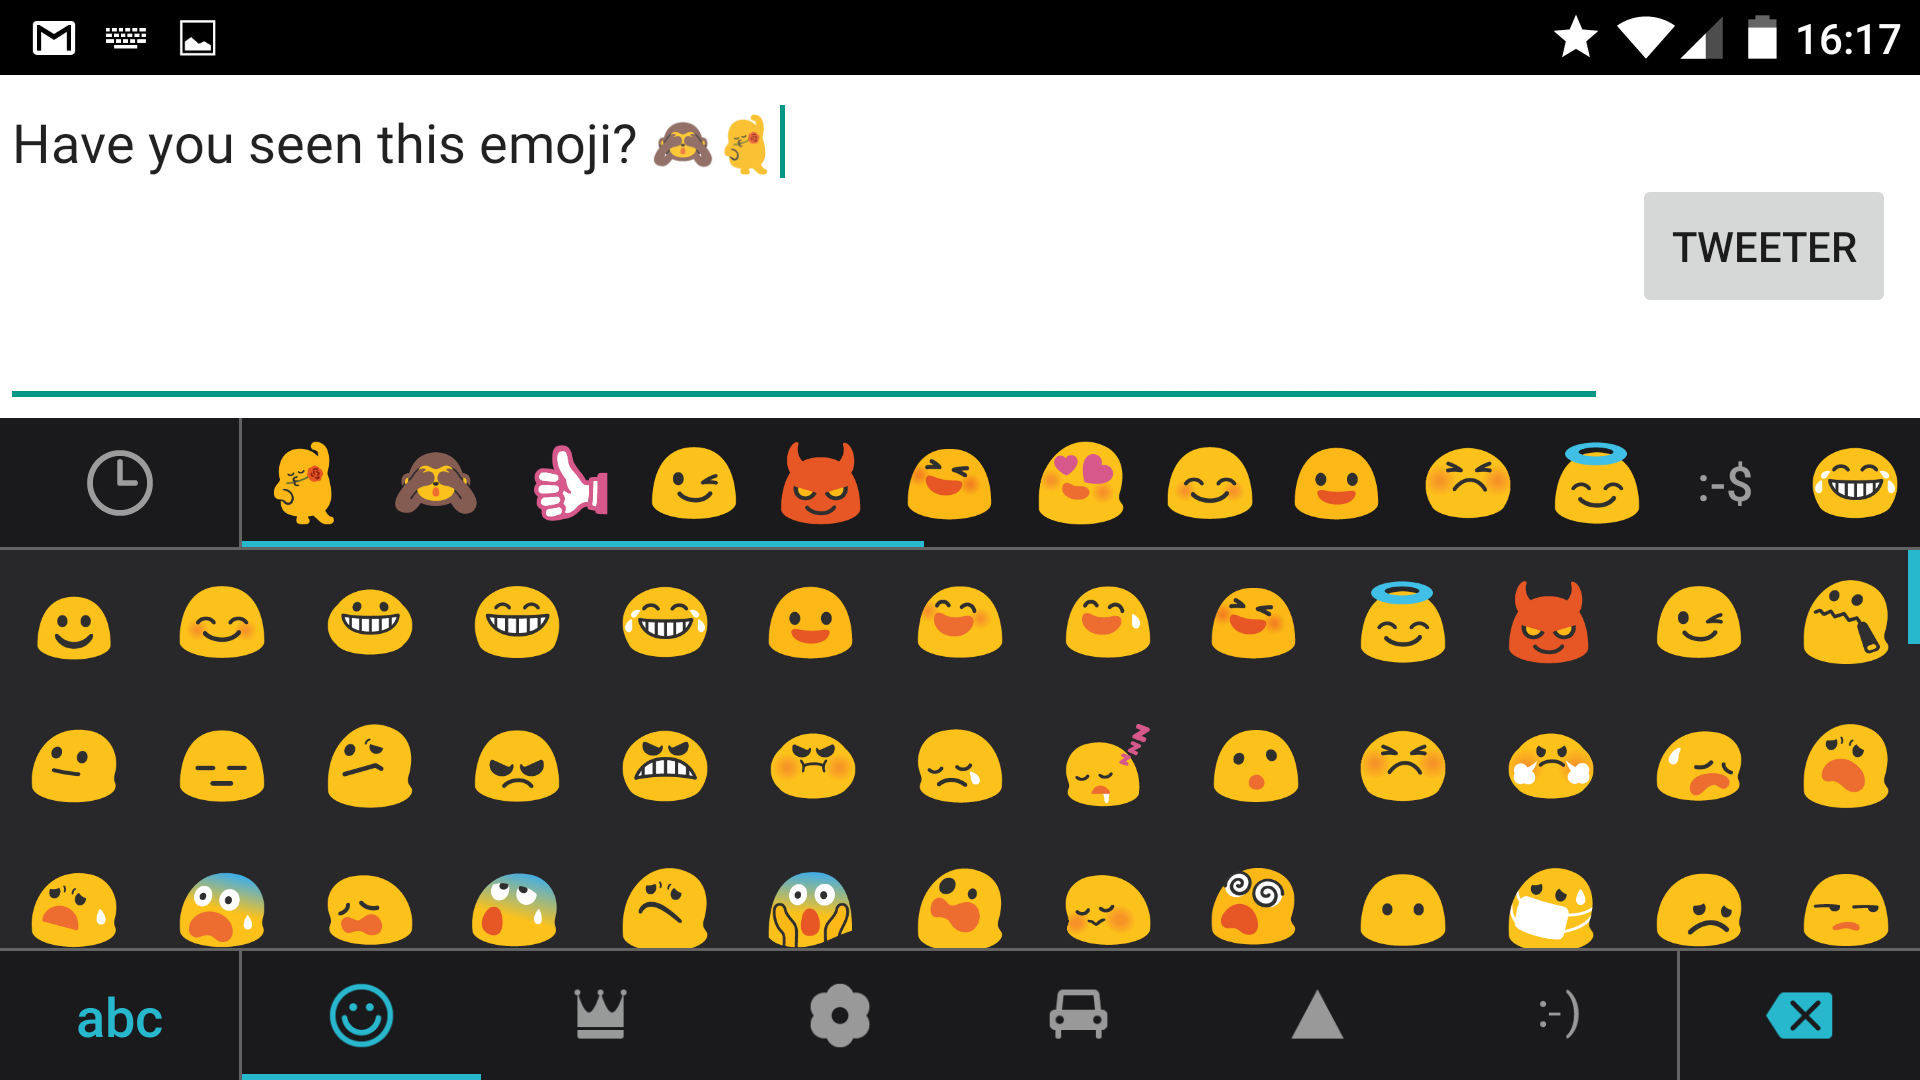 An example of an emoji keyboard